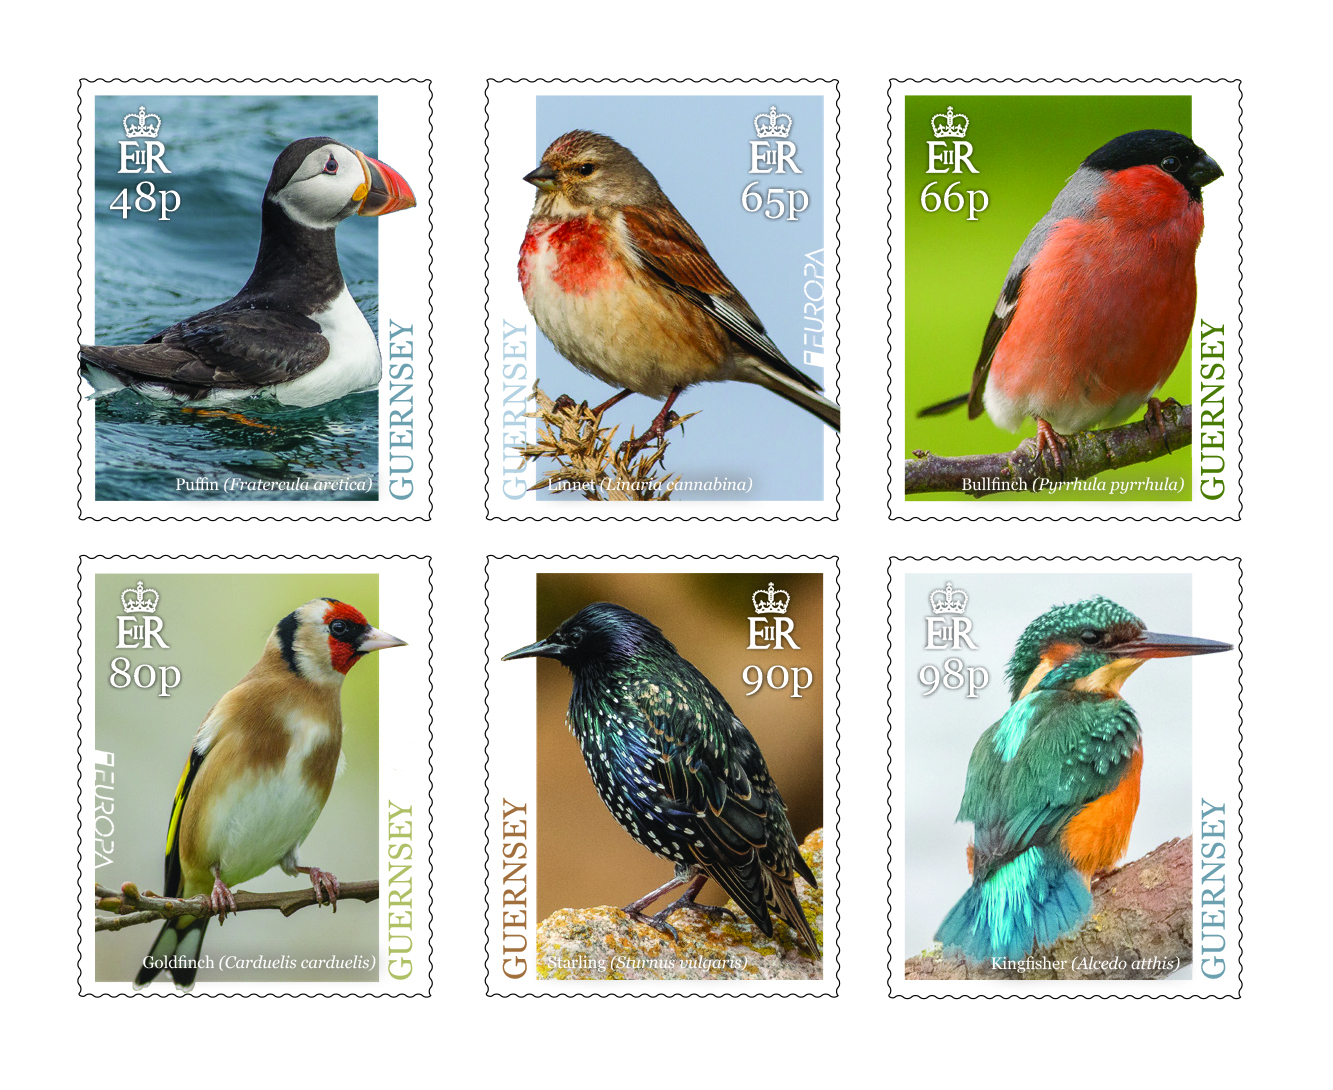 Europa stamps depict singing Bailiwick birds